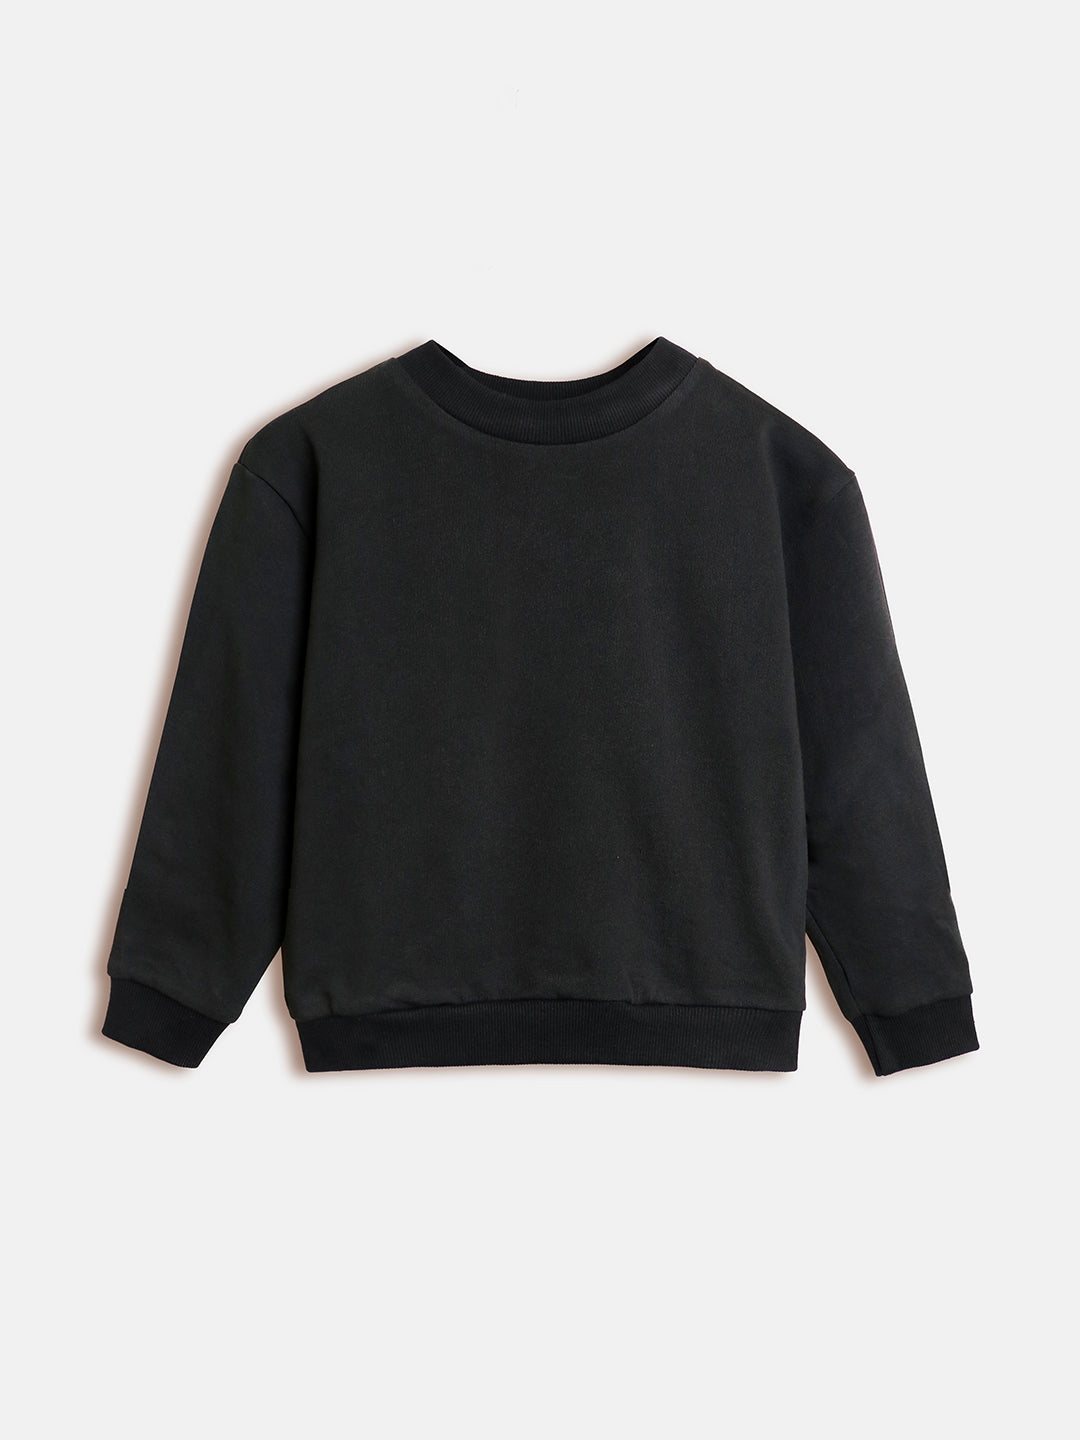 Black solid light weight sweatshirt